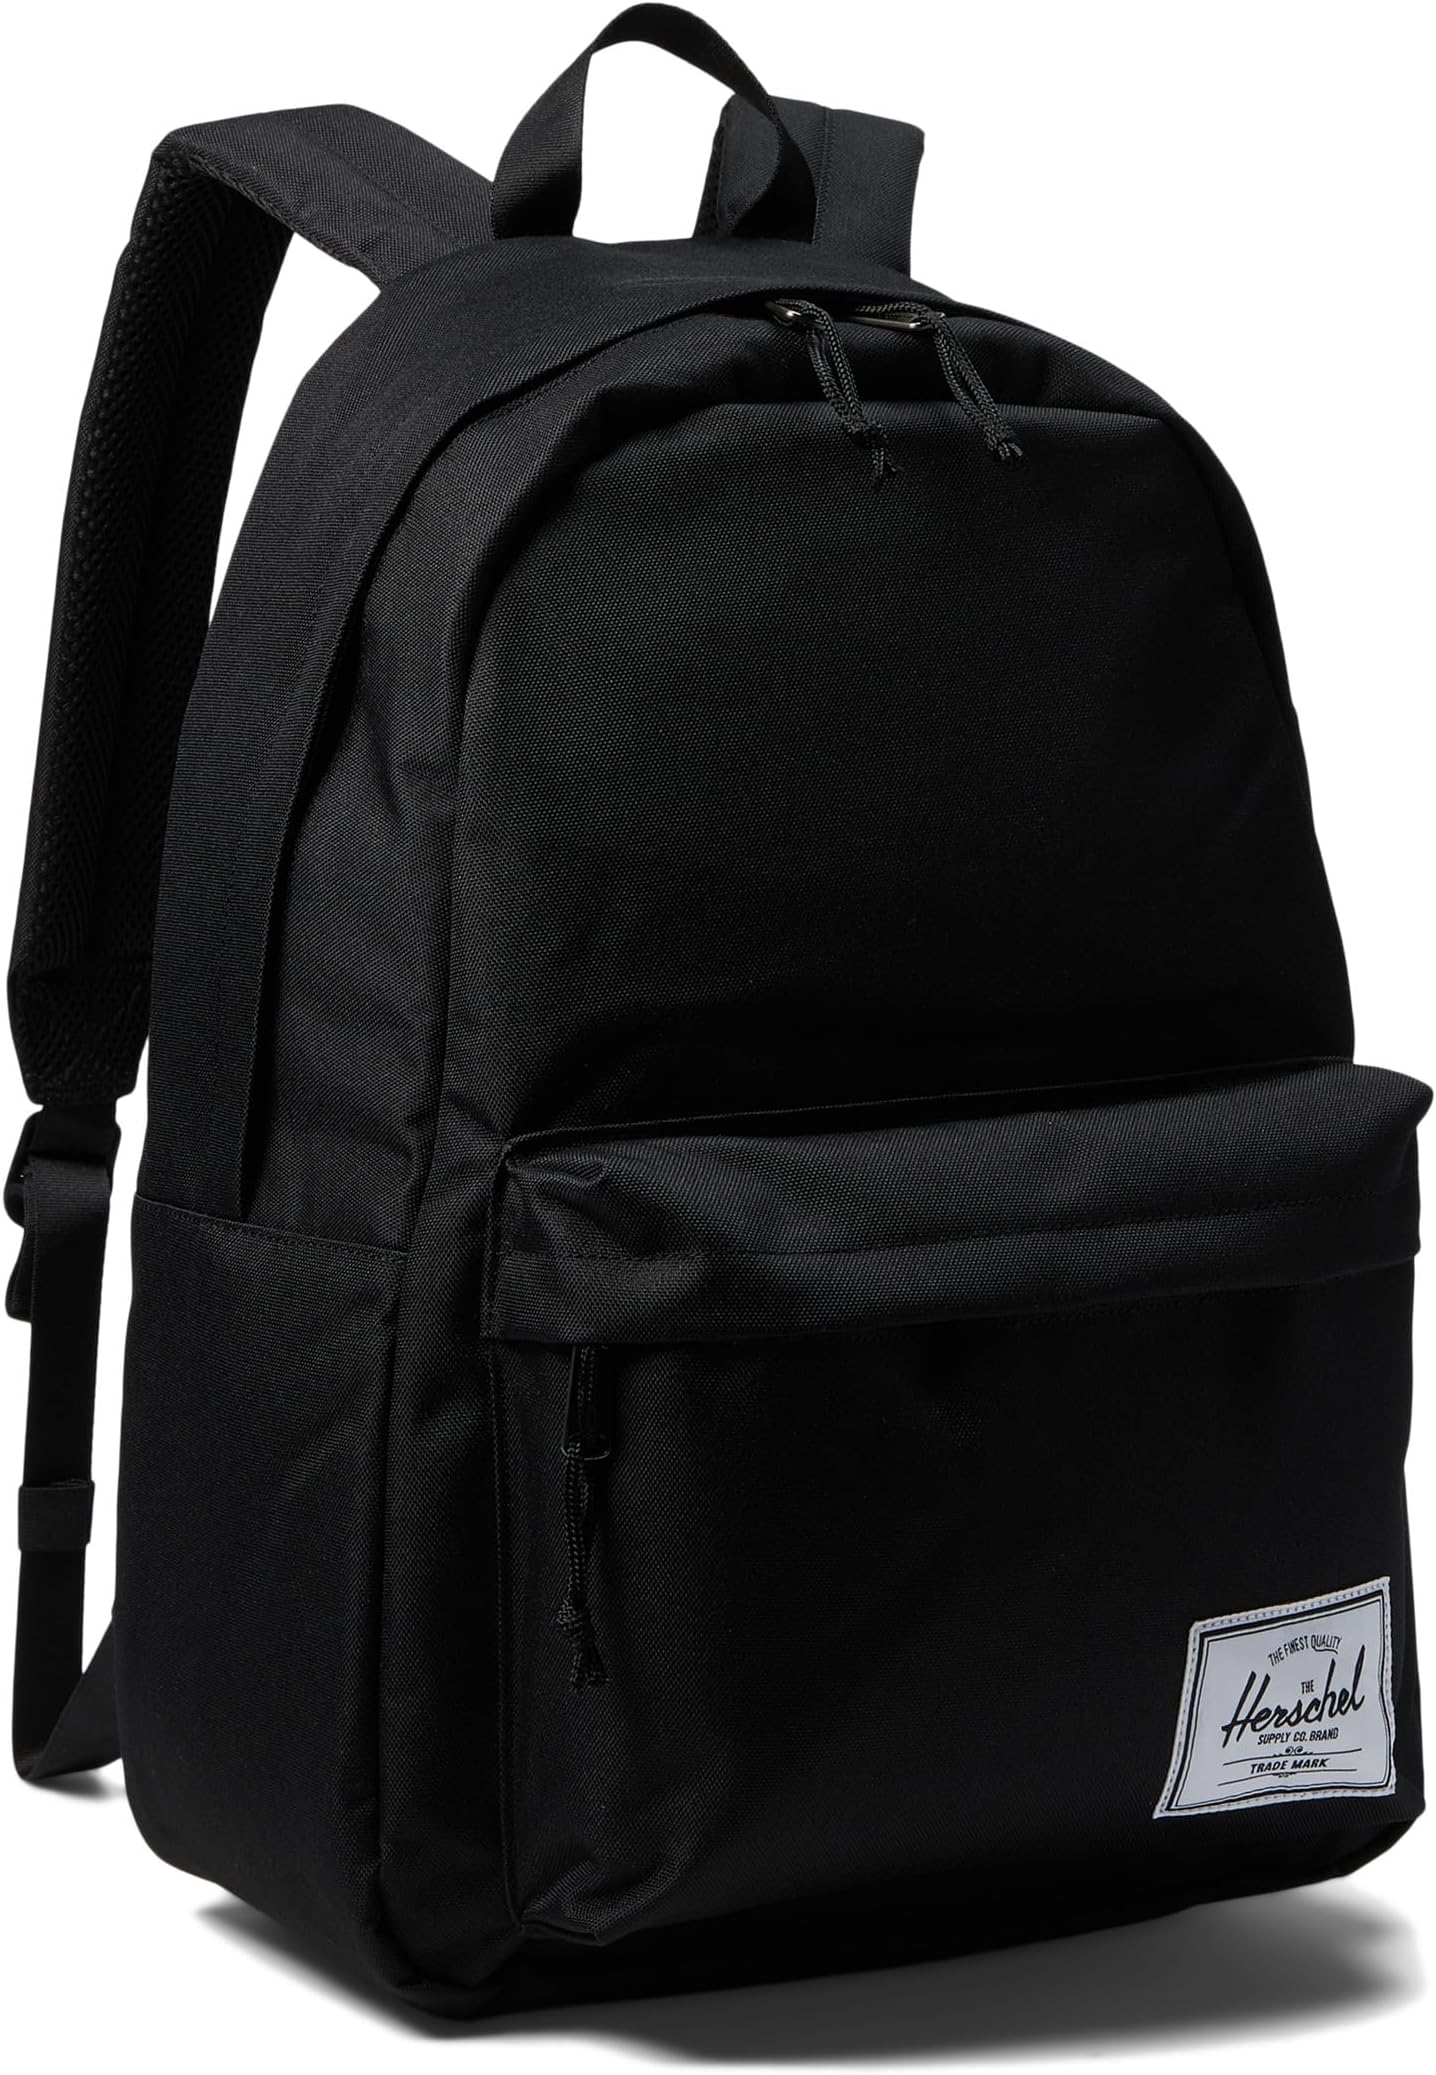 herschel supply co черный рюкзак herschel classic xl Рюкзак Classic XL Backpack Herschel Supply Co., черный